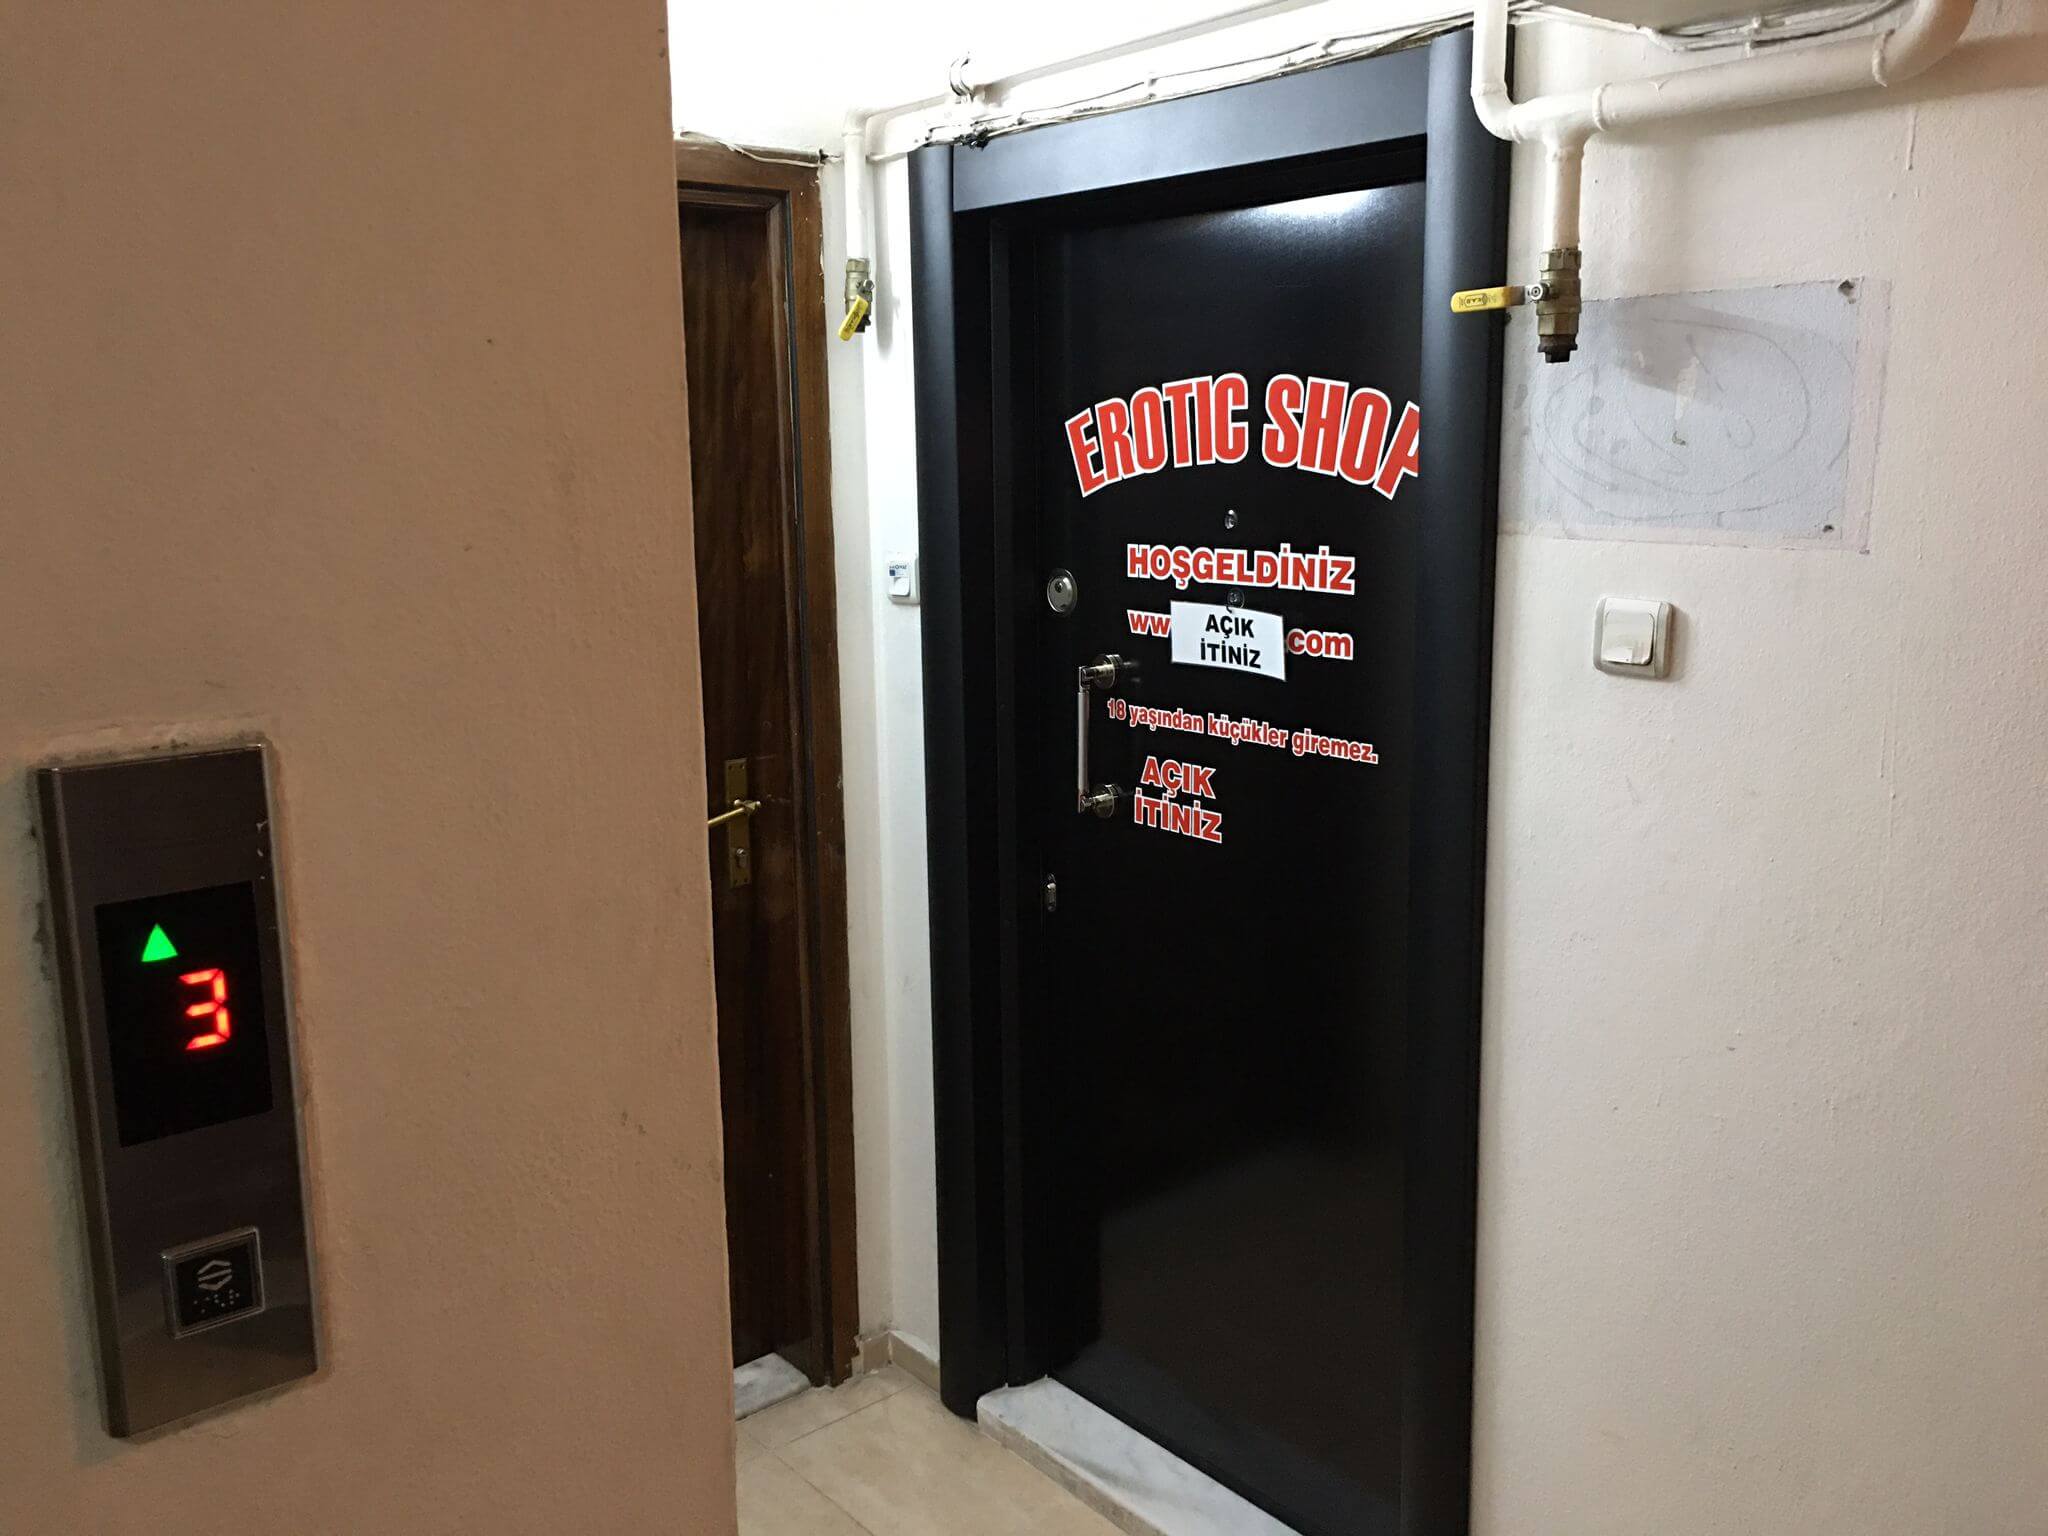 Karşıyaka sex shop mağazamızın giriş kapısı